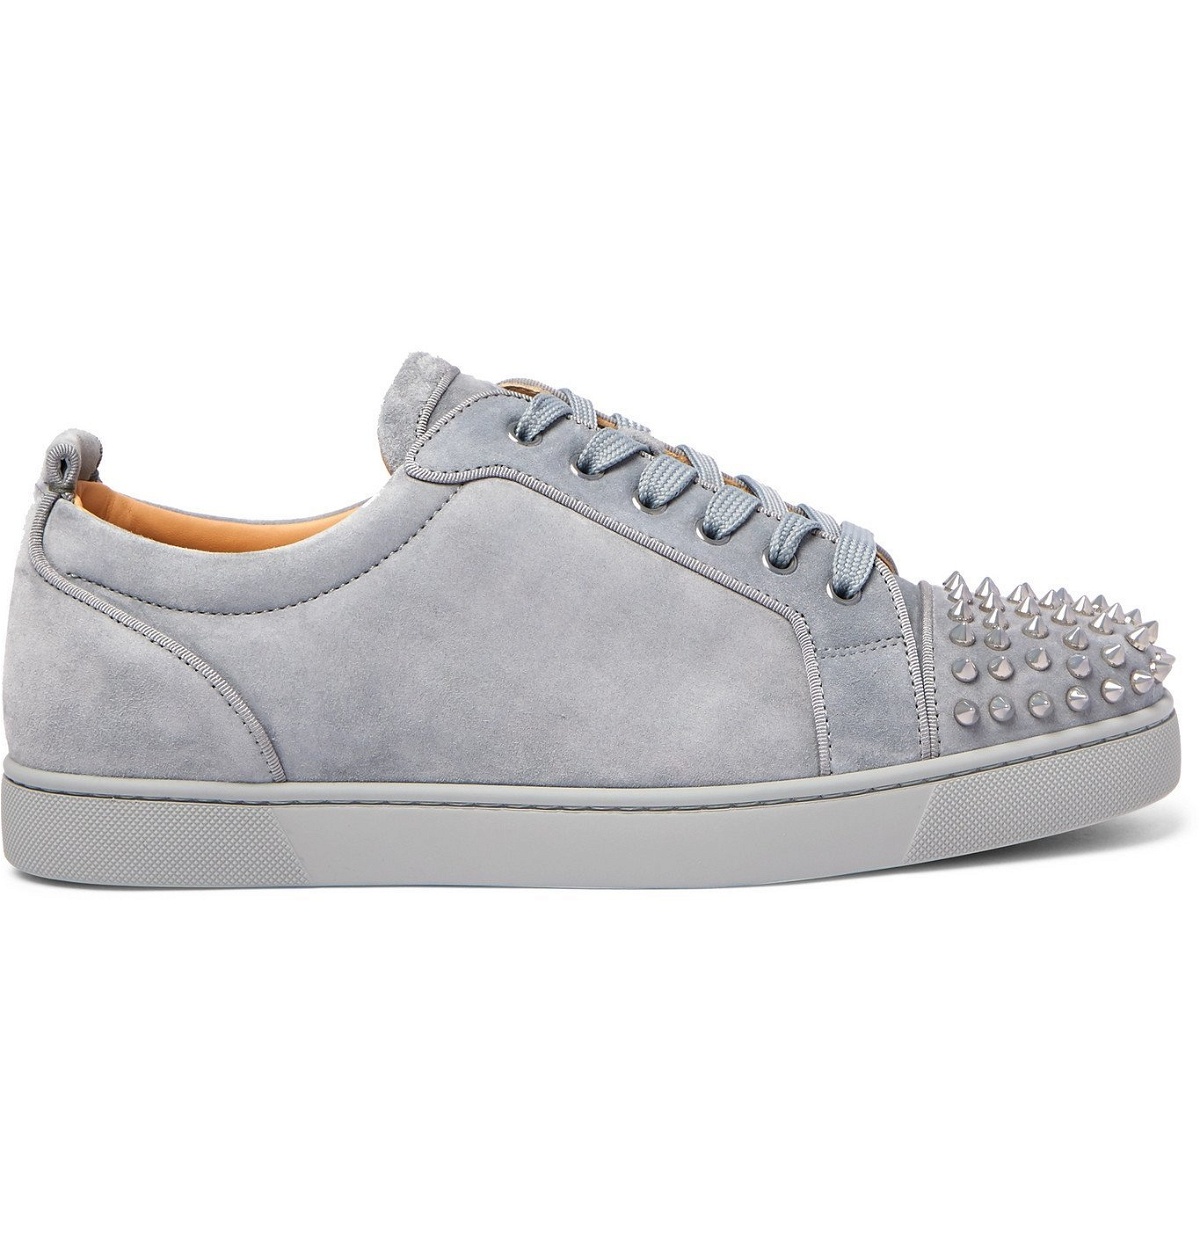 Louis Suede Sneakers in Grey - Christian Louboutin